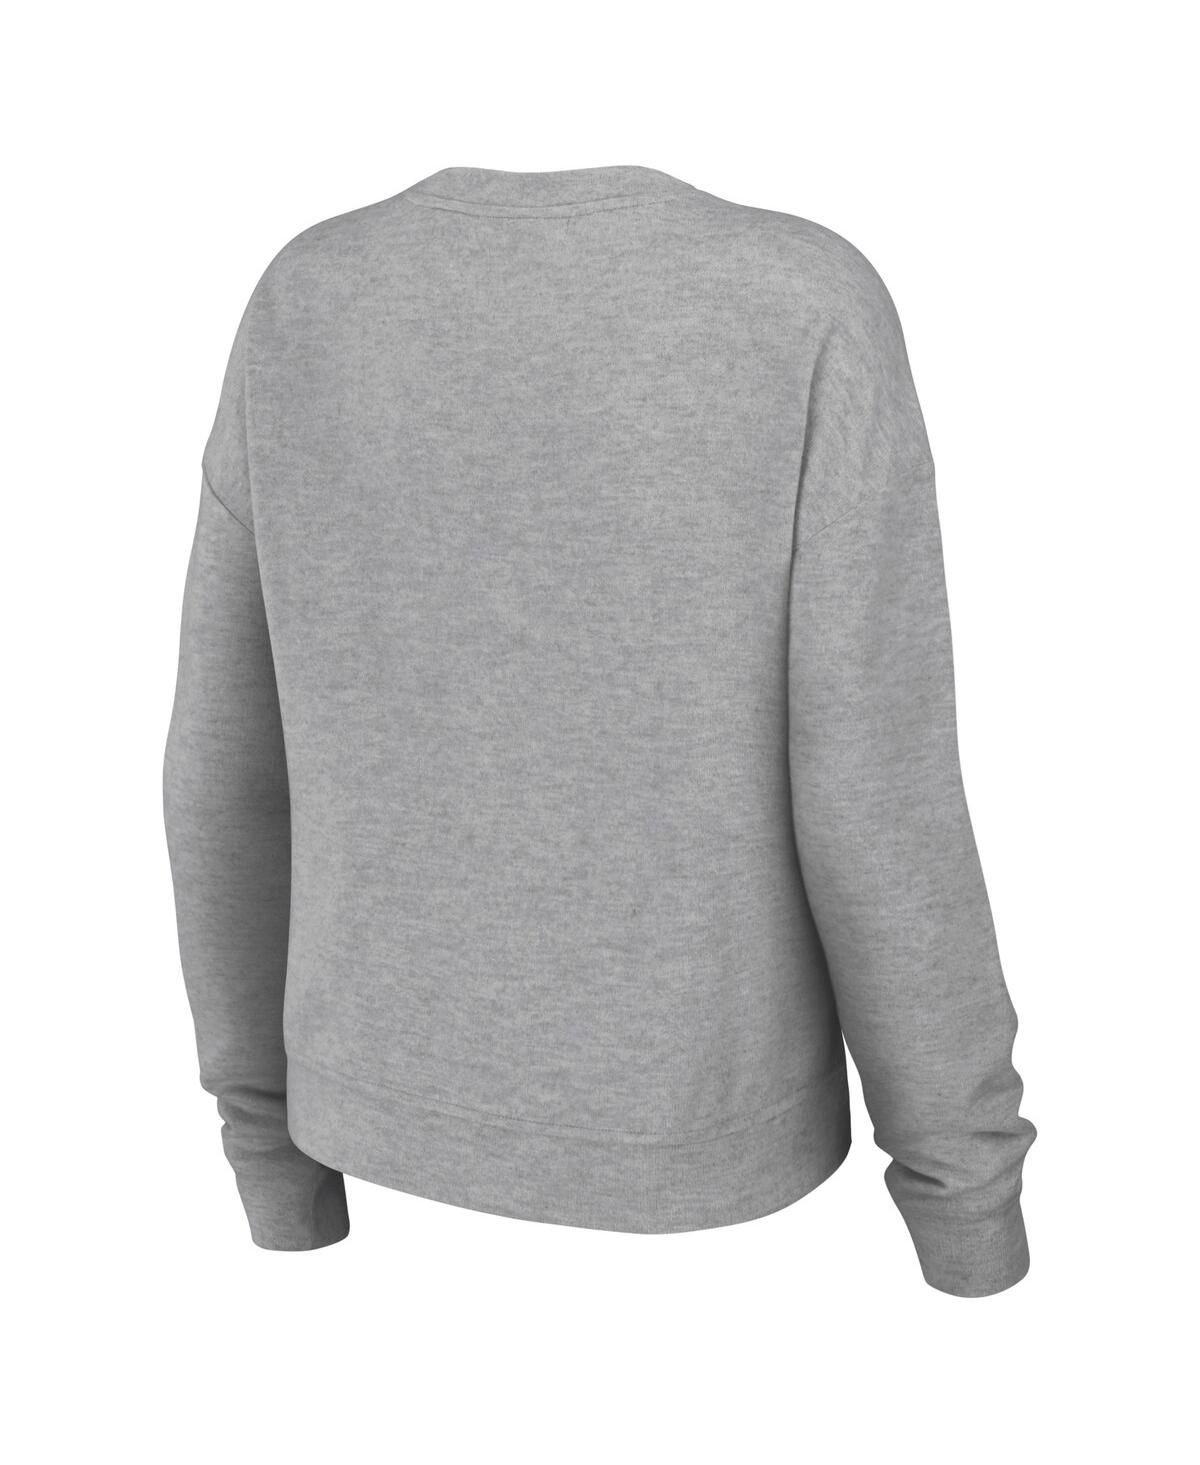 Shop Wear By Erin Andrews Women's  Heather Gray New England Patriots Knit Long Sleeve Tri-blend T-shirt An